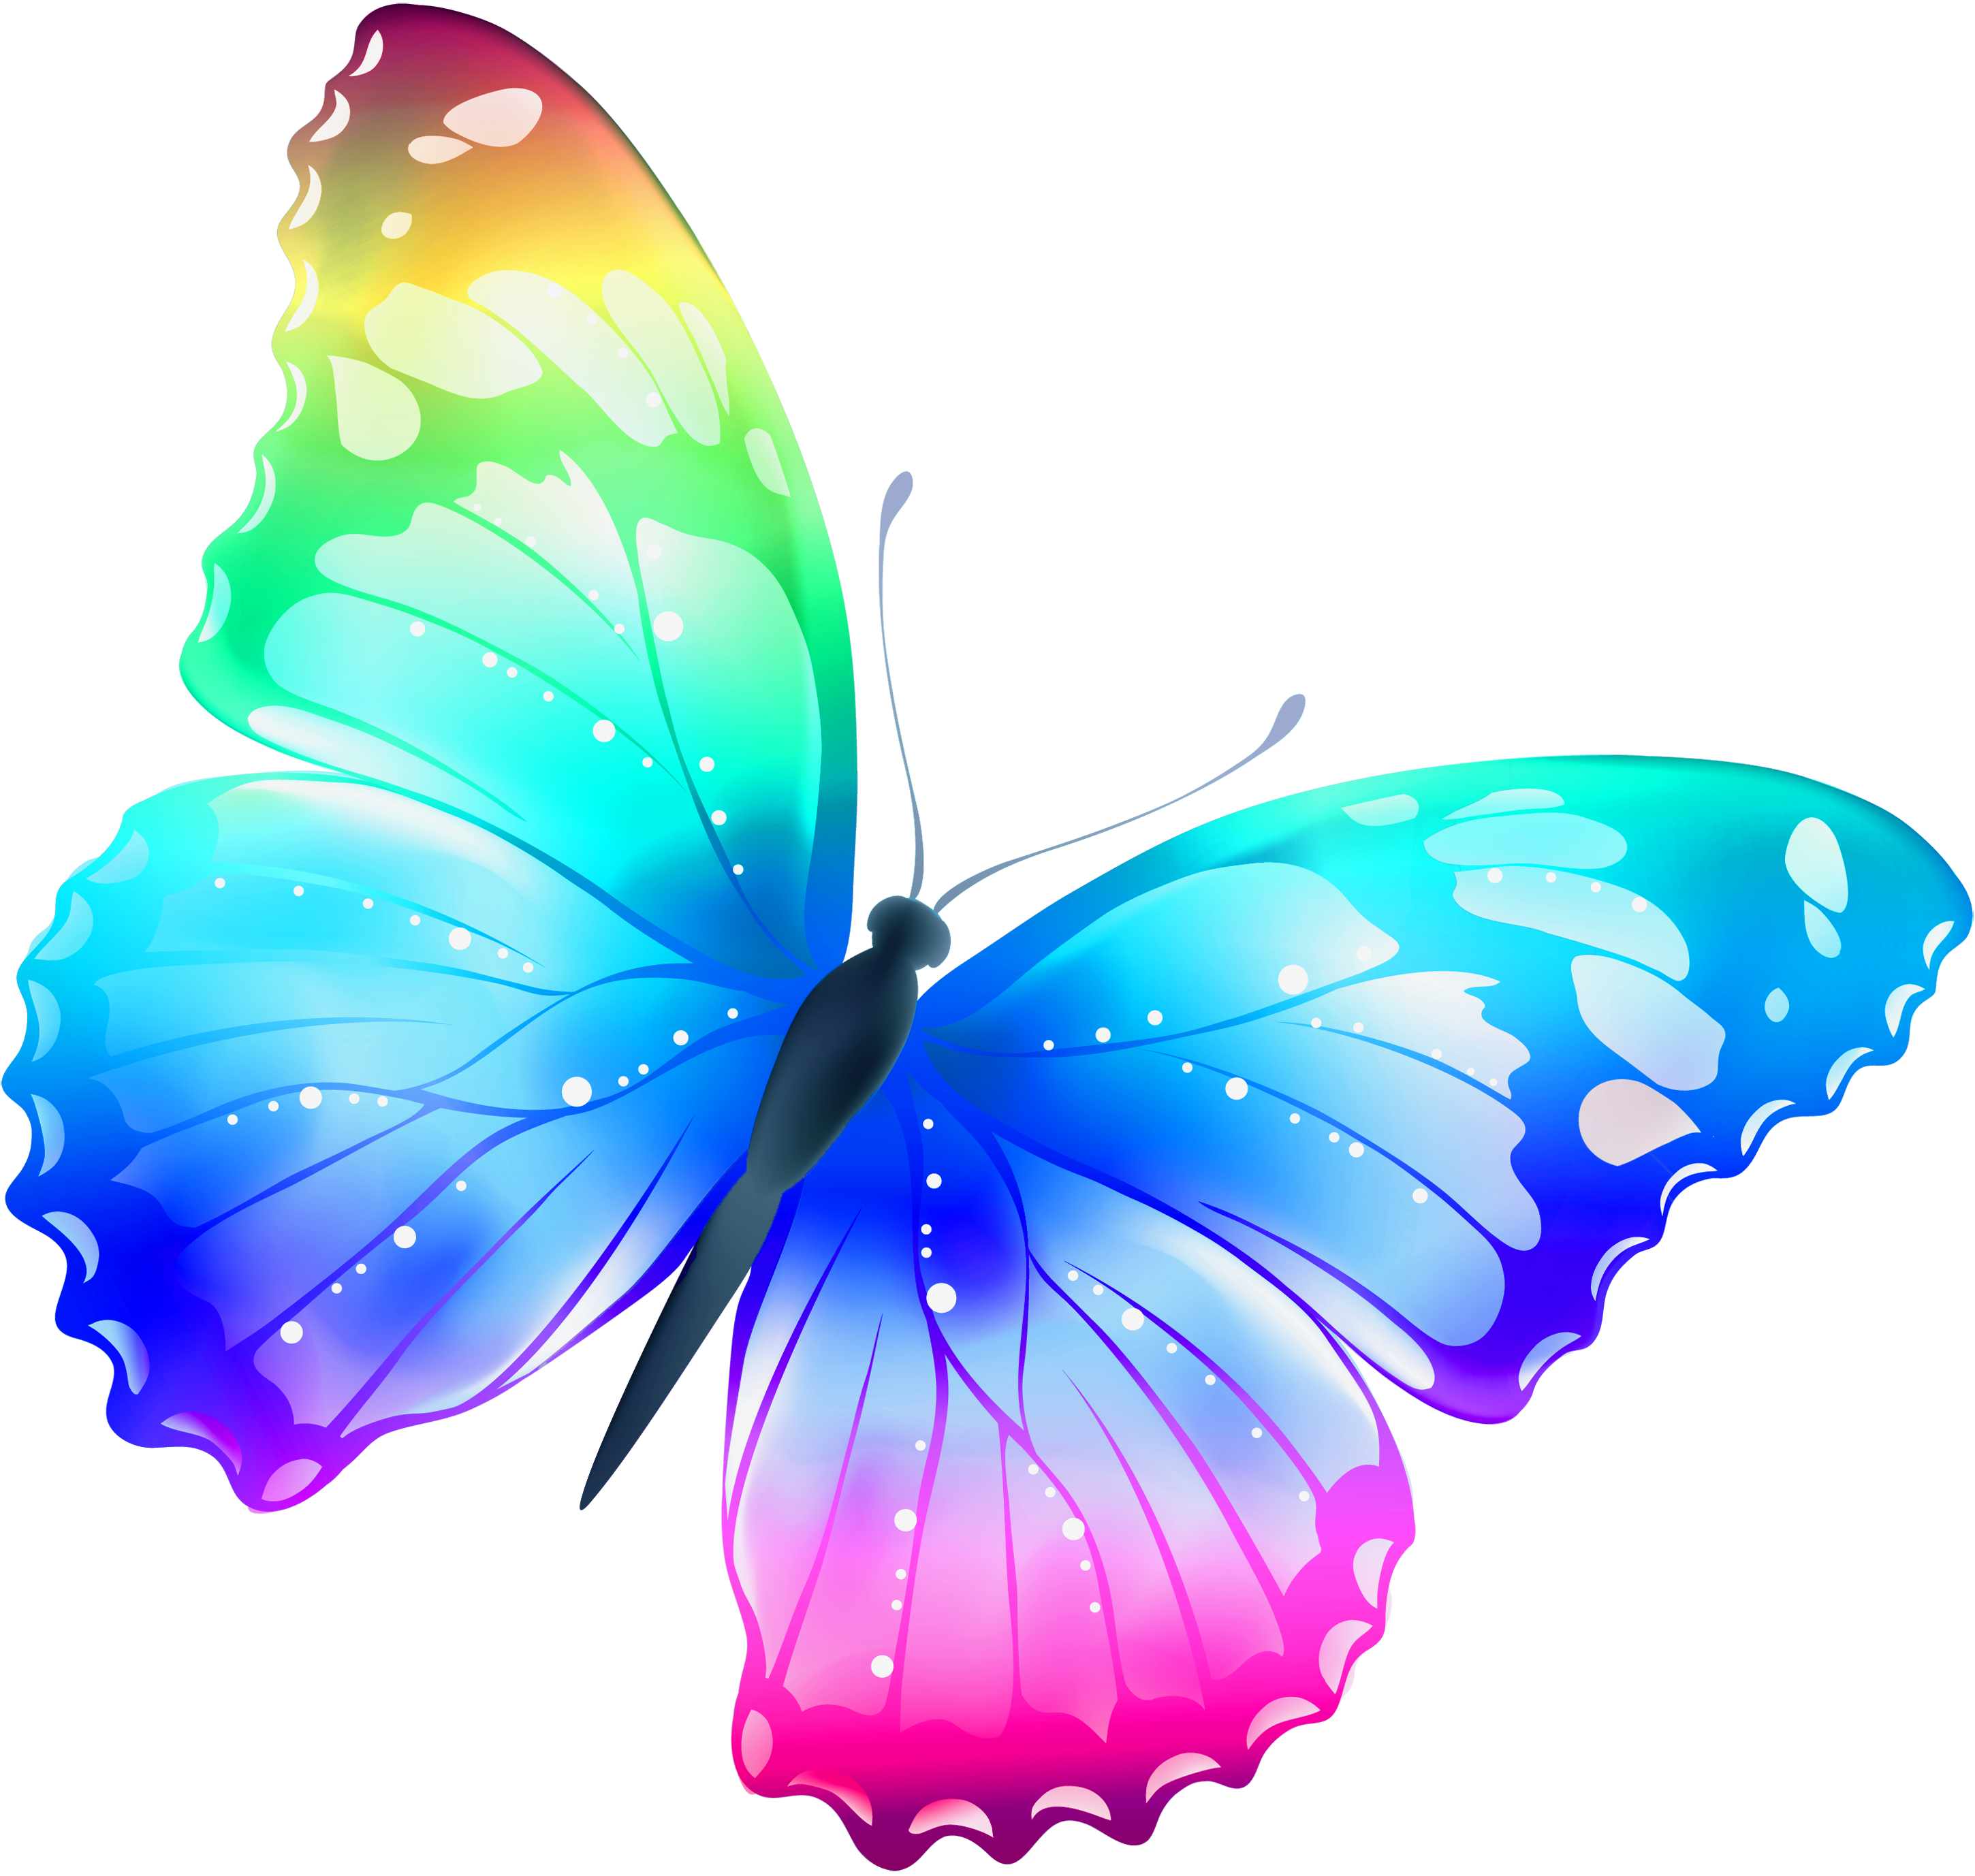 Butterflies Clipart | Free Download Clip Art | Free Clip Art | on ...